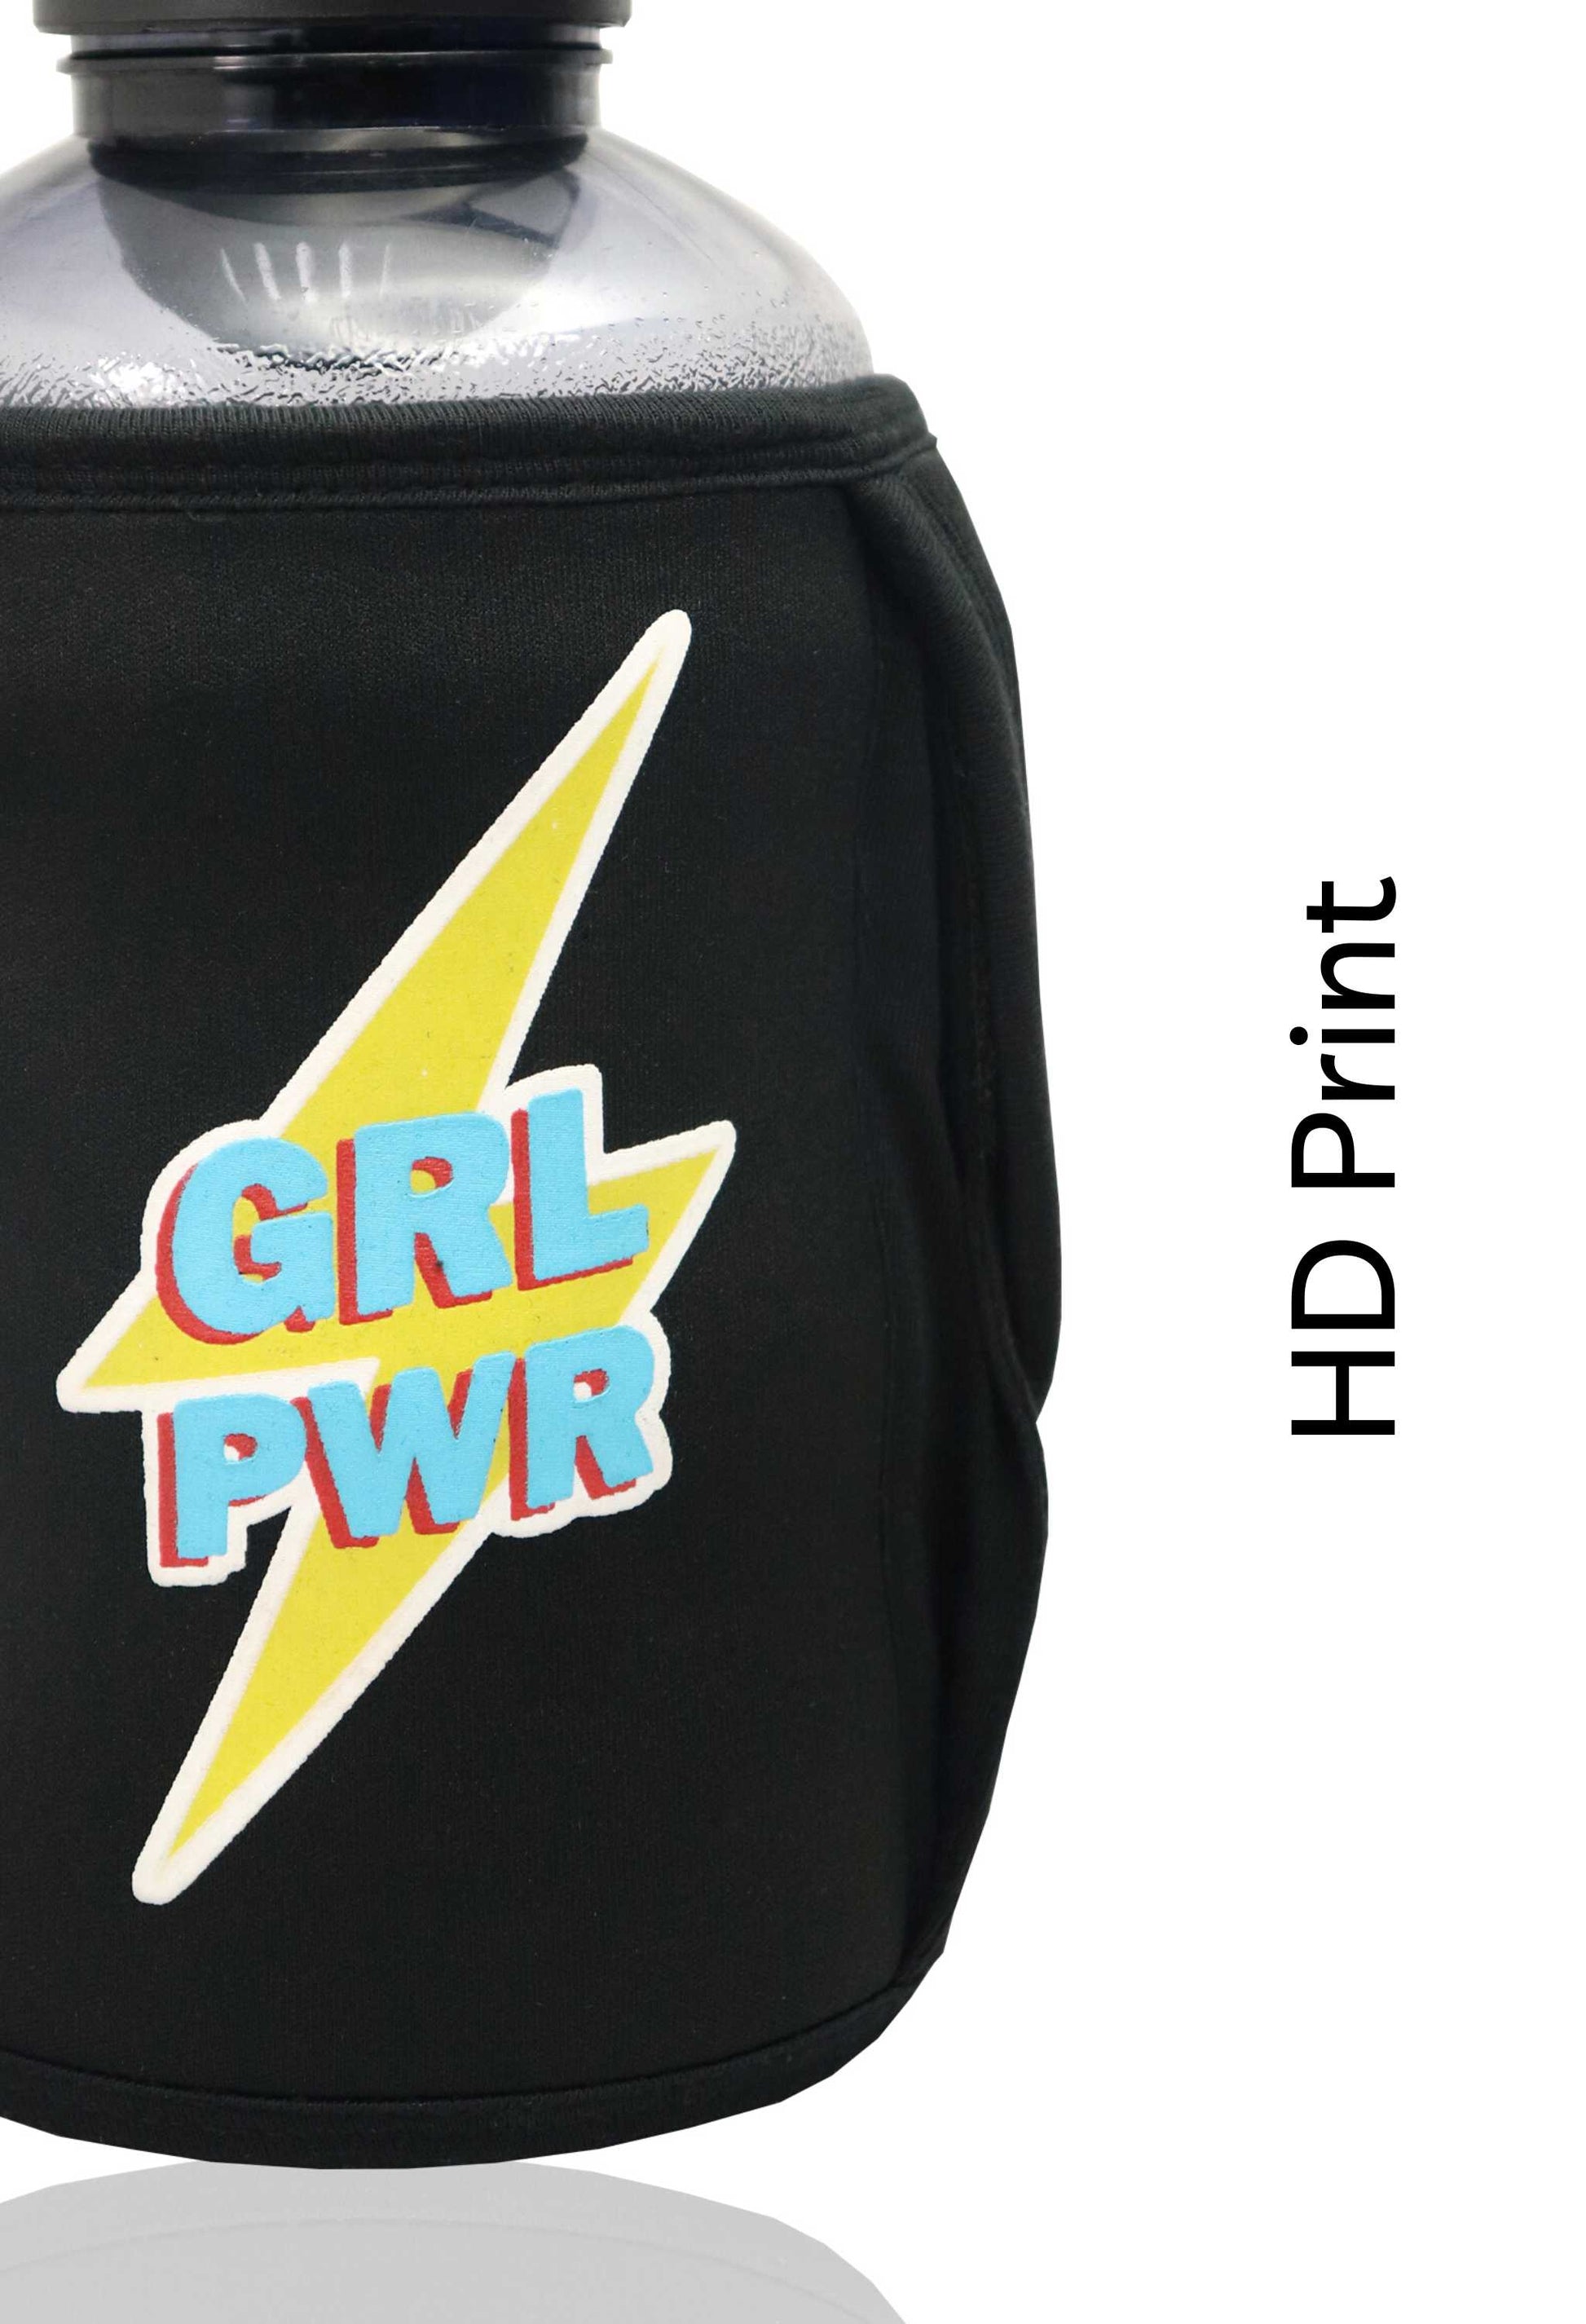 Girl Power - Gallon Gym Bottle 1.5L Strong Soul Gym Bottle